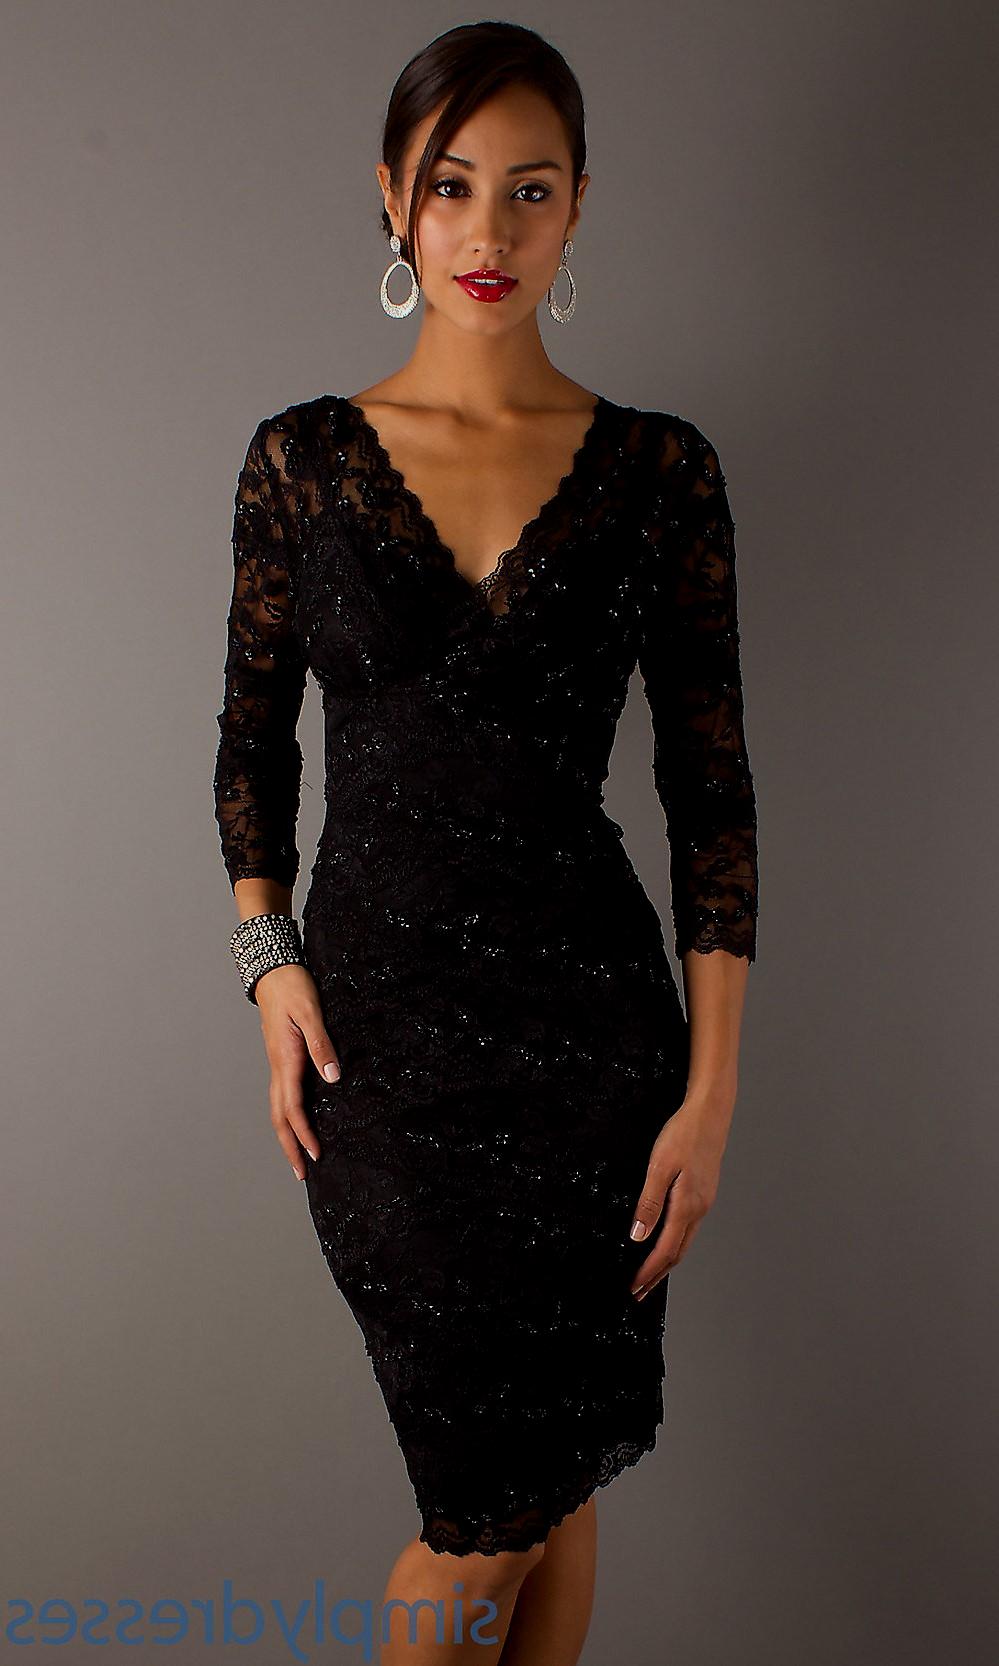 Elegant black cocktail dresses - SandiegoTowingca.com